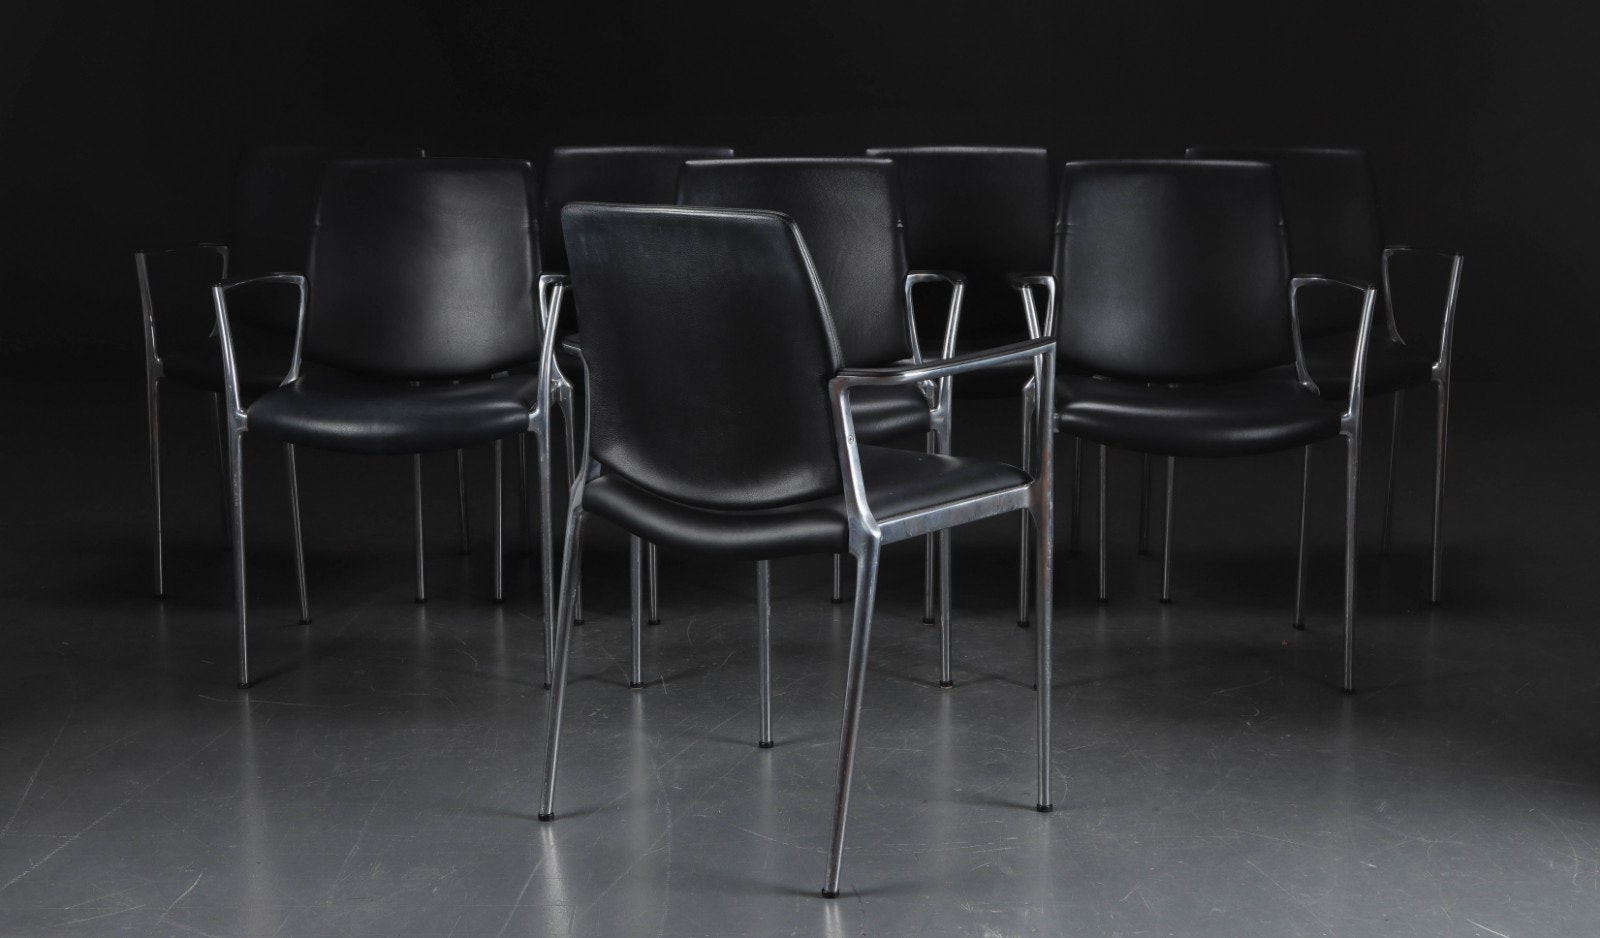 8 x Stühle, Kusch & Co Capa Programm 4200 - Schwarzes Leder - Design Jorge Pensi